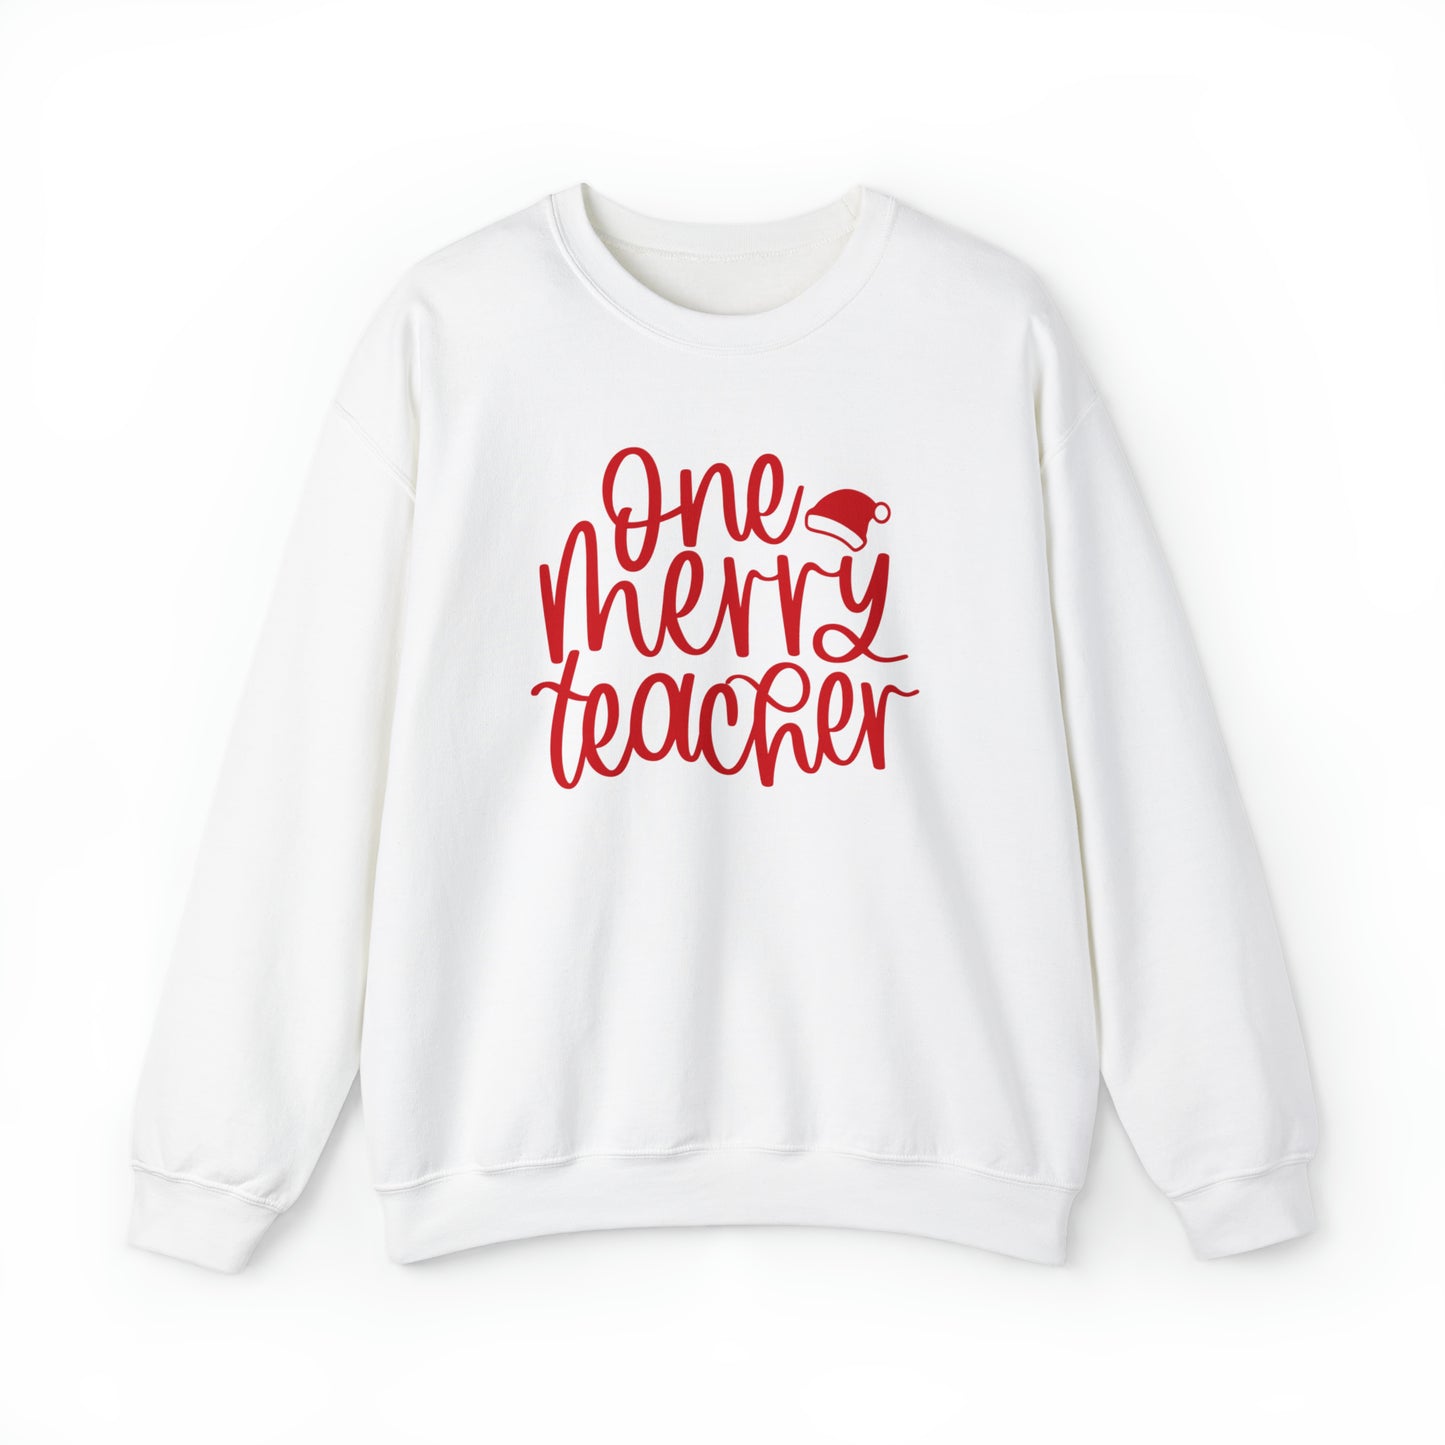 One Merry Teacher Christmas Crewneck Sweater